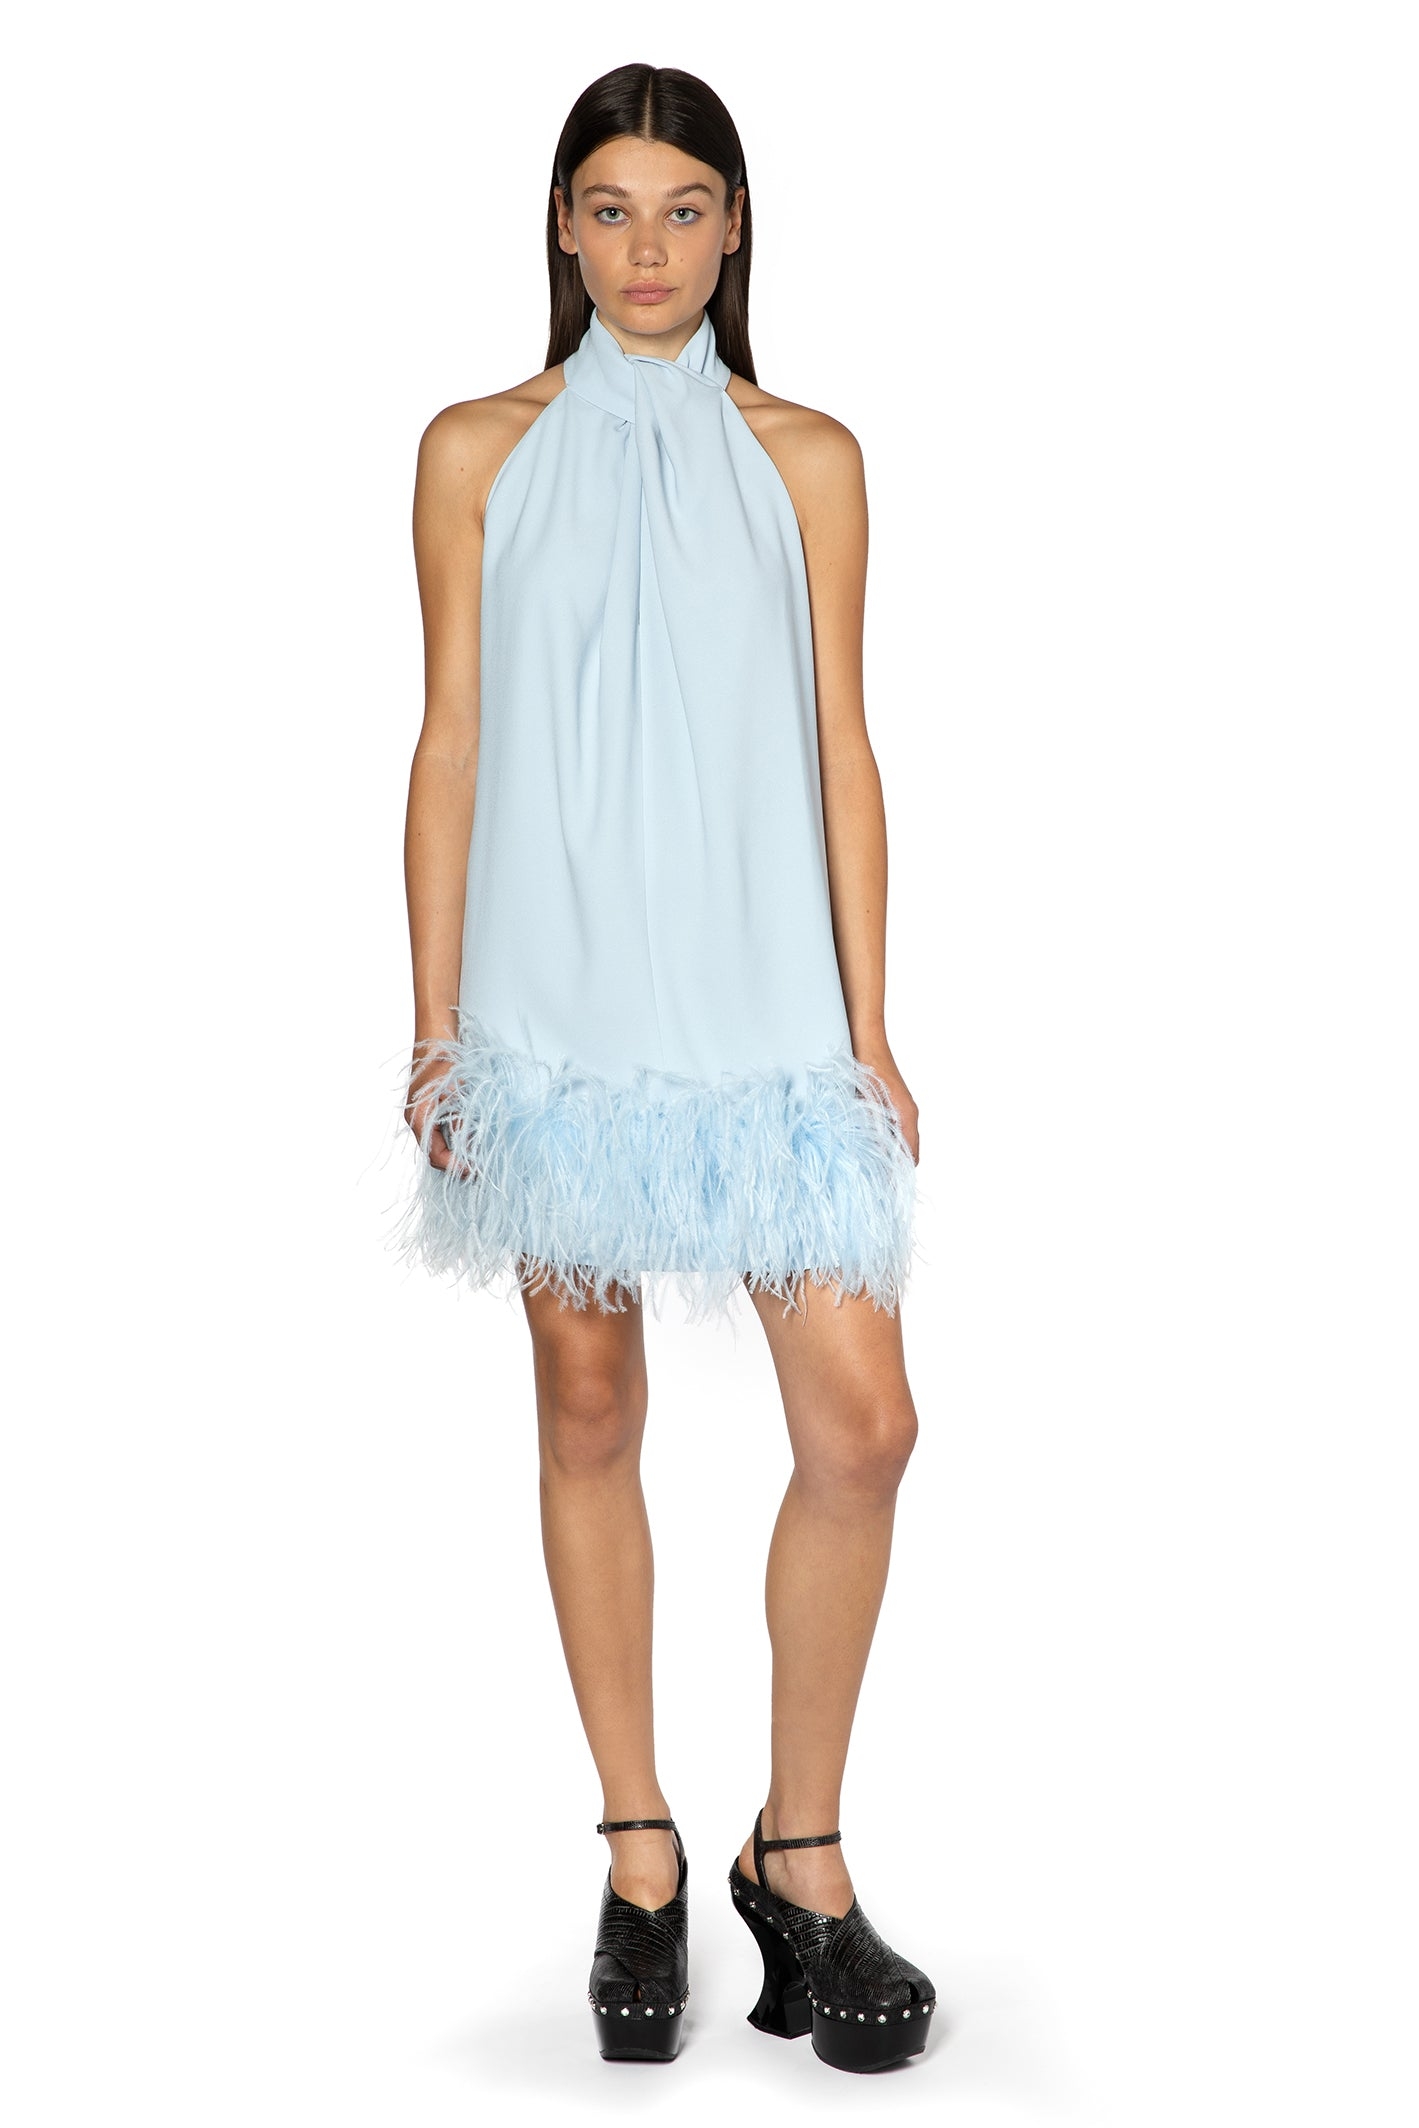 CYNTHIA MINI DRESS IN BABY BLUE CREPE, 6 – 16Arlington